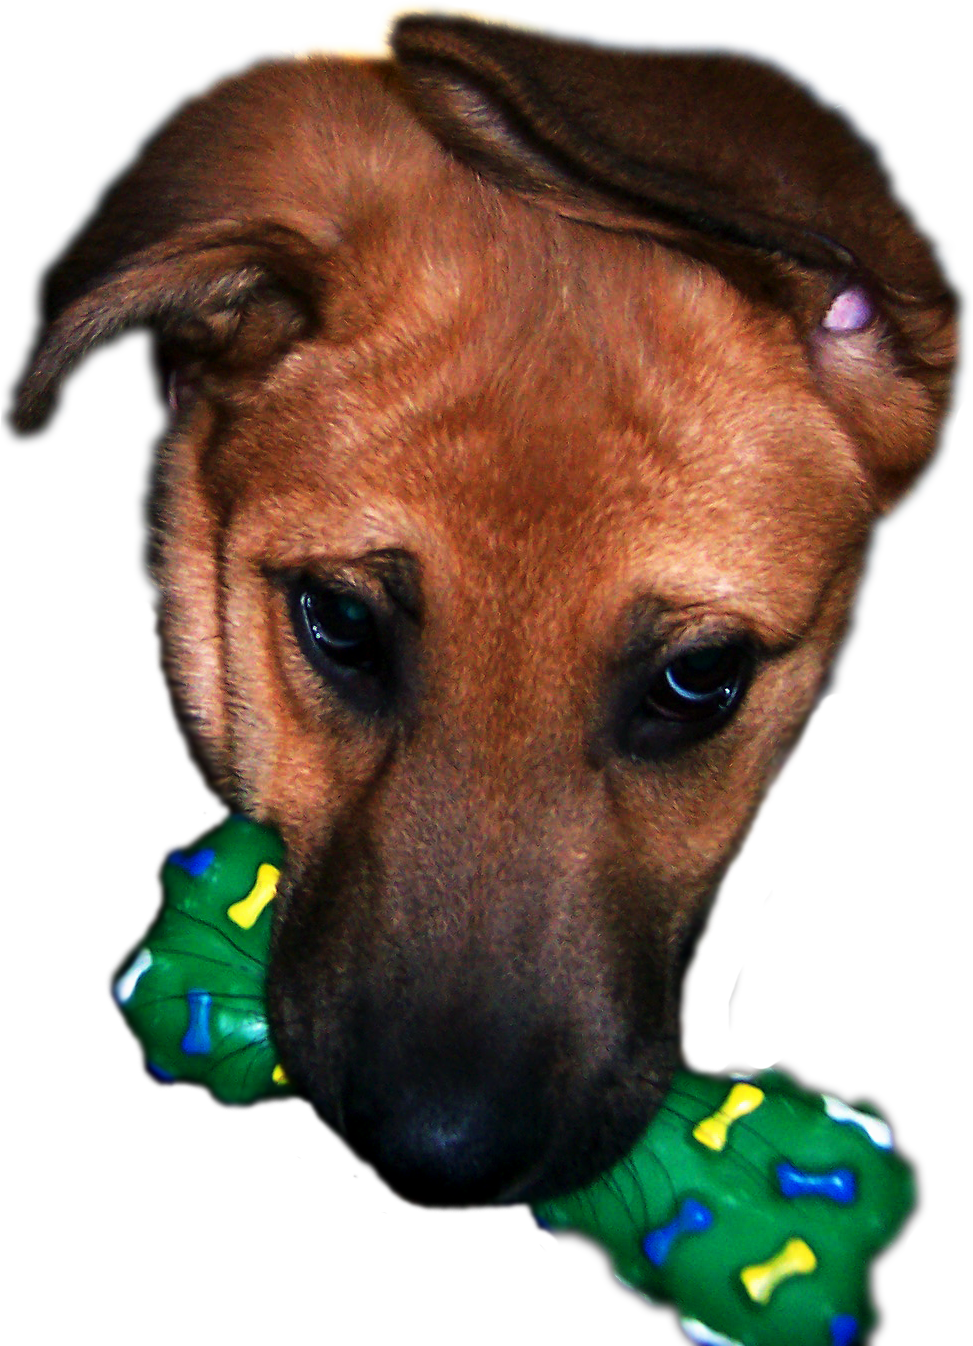 Hundwelpe Samson - Dog Puppy Samson